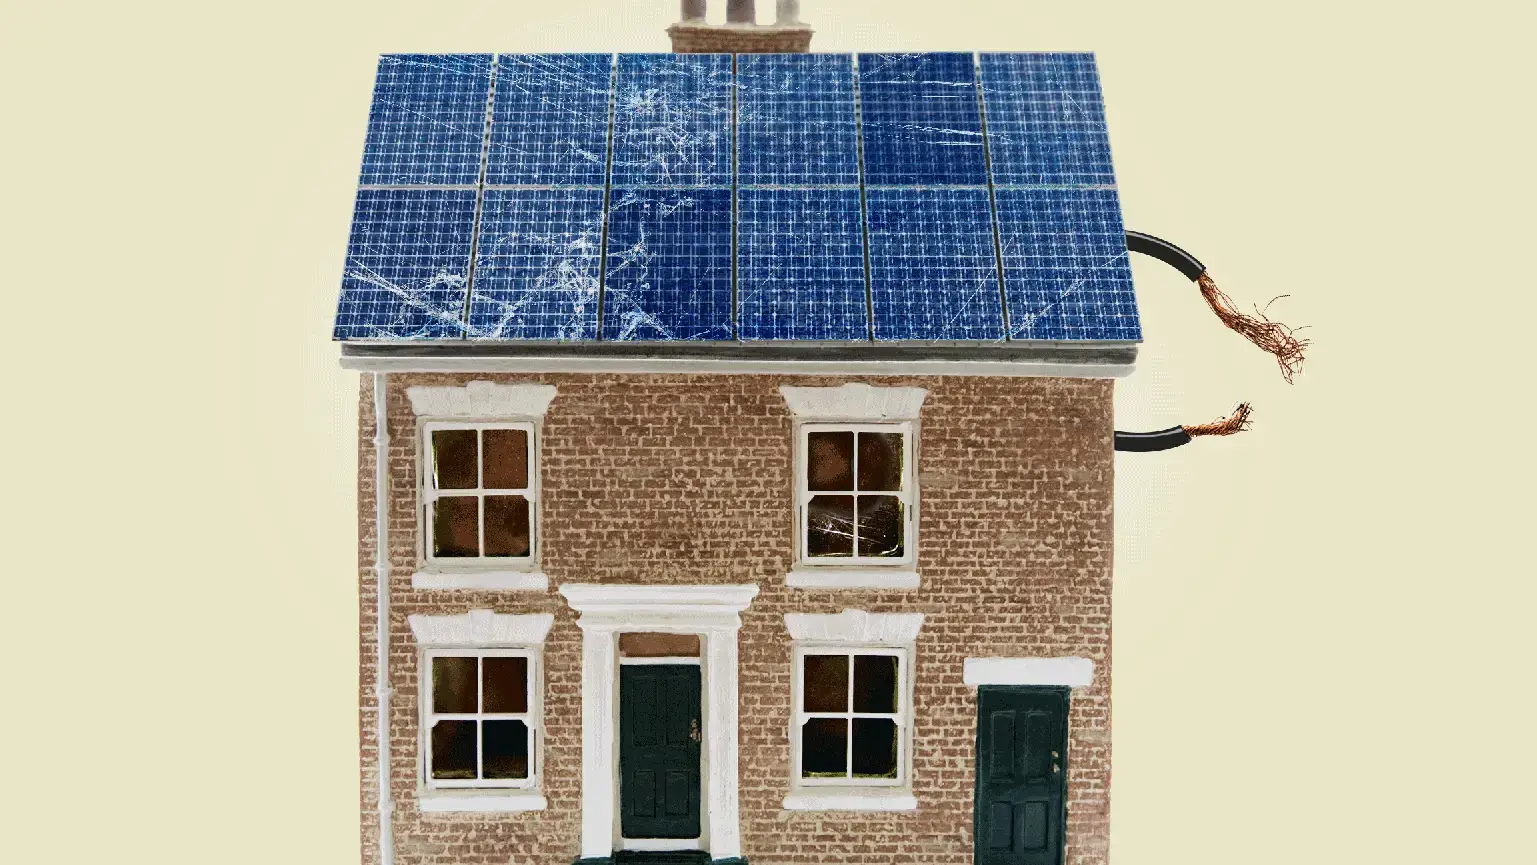 Rooftop solar power has a dark side